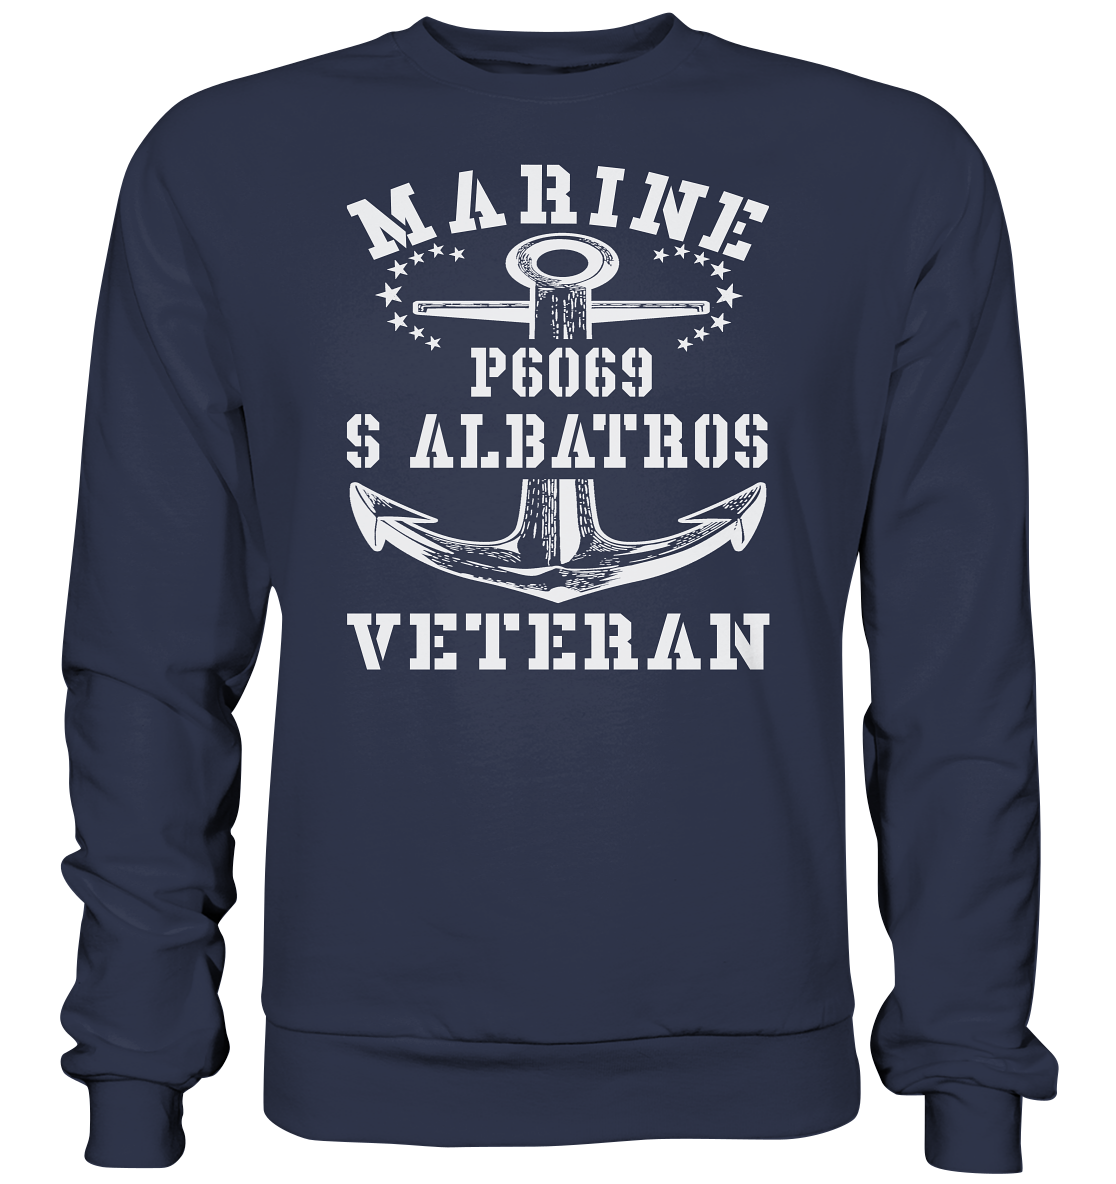 P6069 S ALBATROS Marine Veteran - Premium Sweatshirt